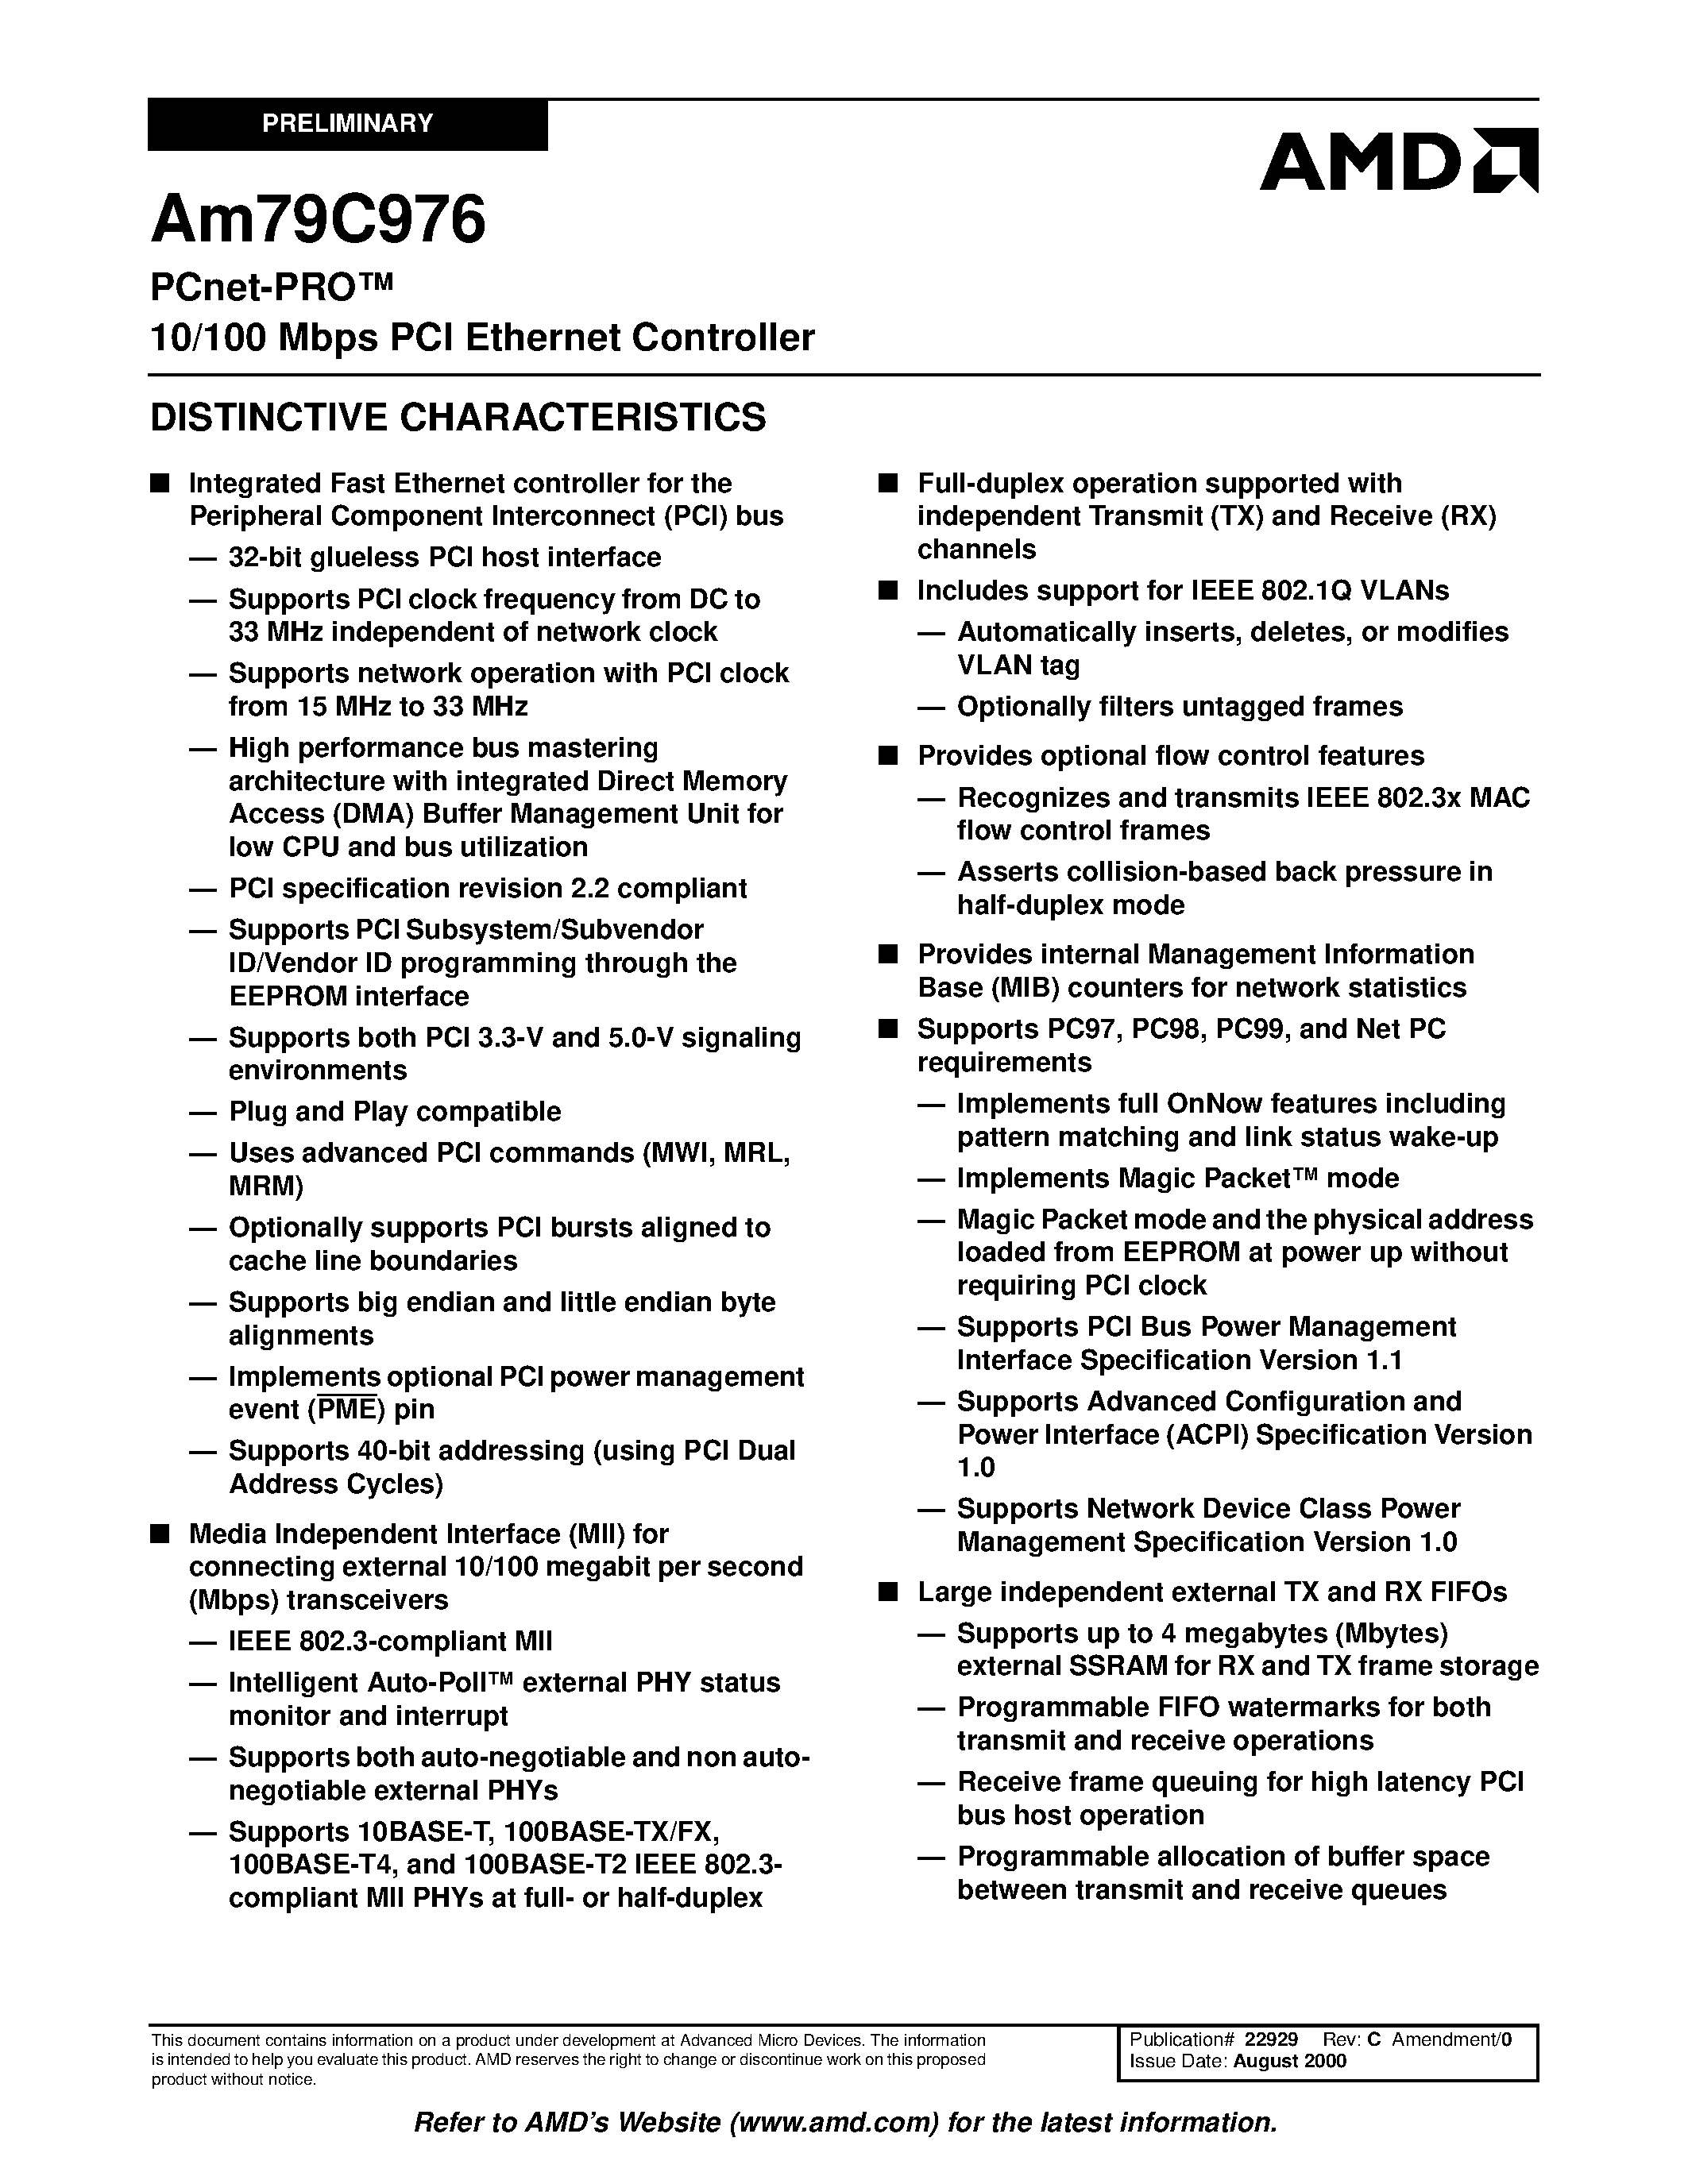 Datasheet AM79C976 - PCnet-PRO 10/100 Mbps PCI Ethernet Controller page 1